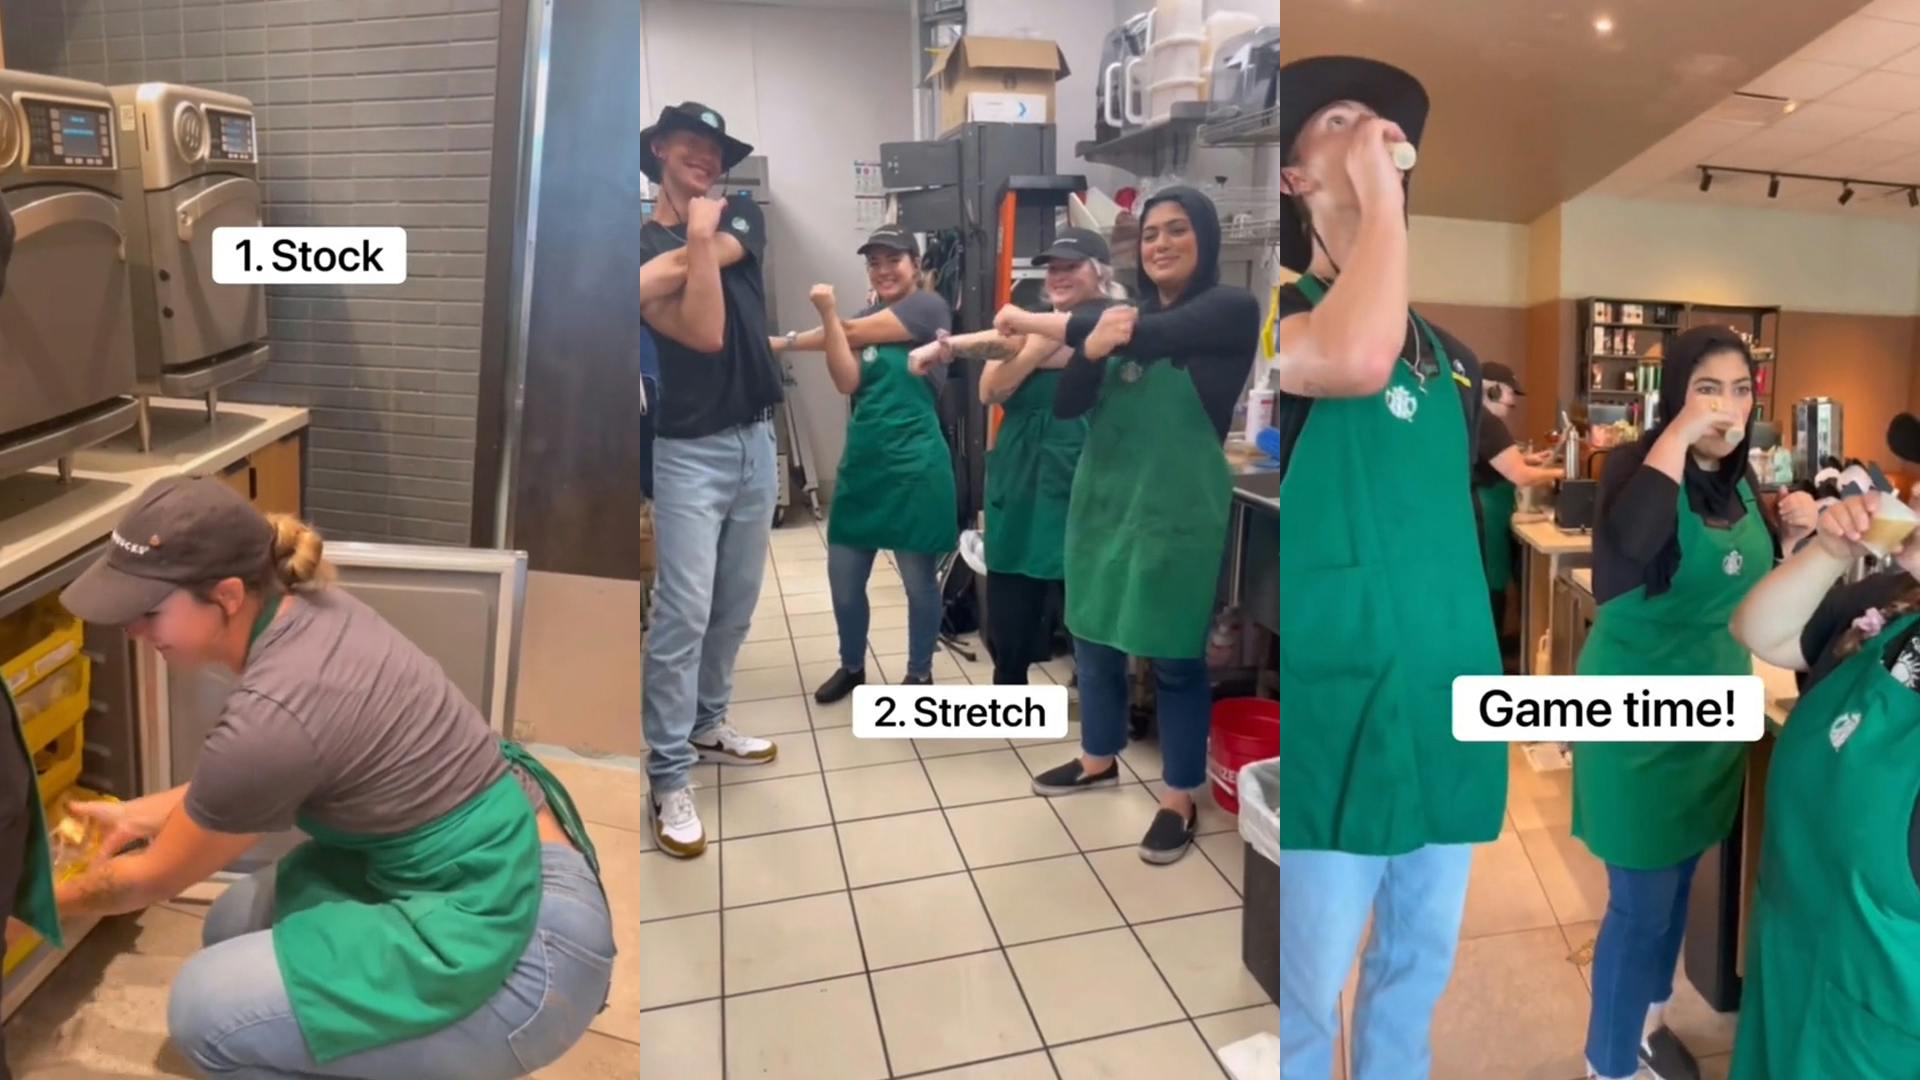 Starbucks barista stocking capti0on "1.Stock" (l) Starbucks baristas in back stretching caption "2.Stretch" (c) Starbucks baristas taking nitro shots caption "Game Time!" (r)